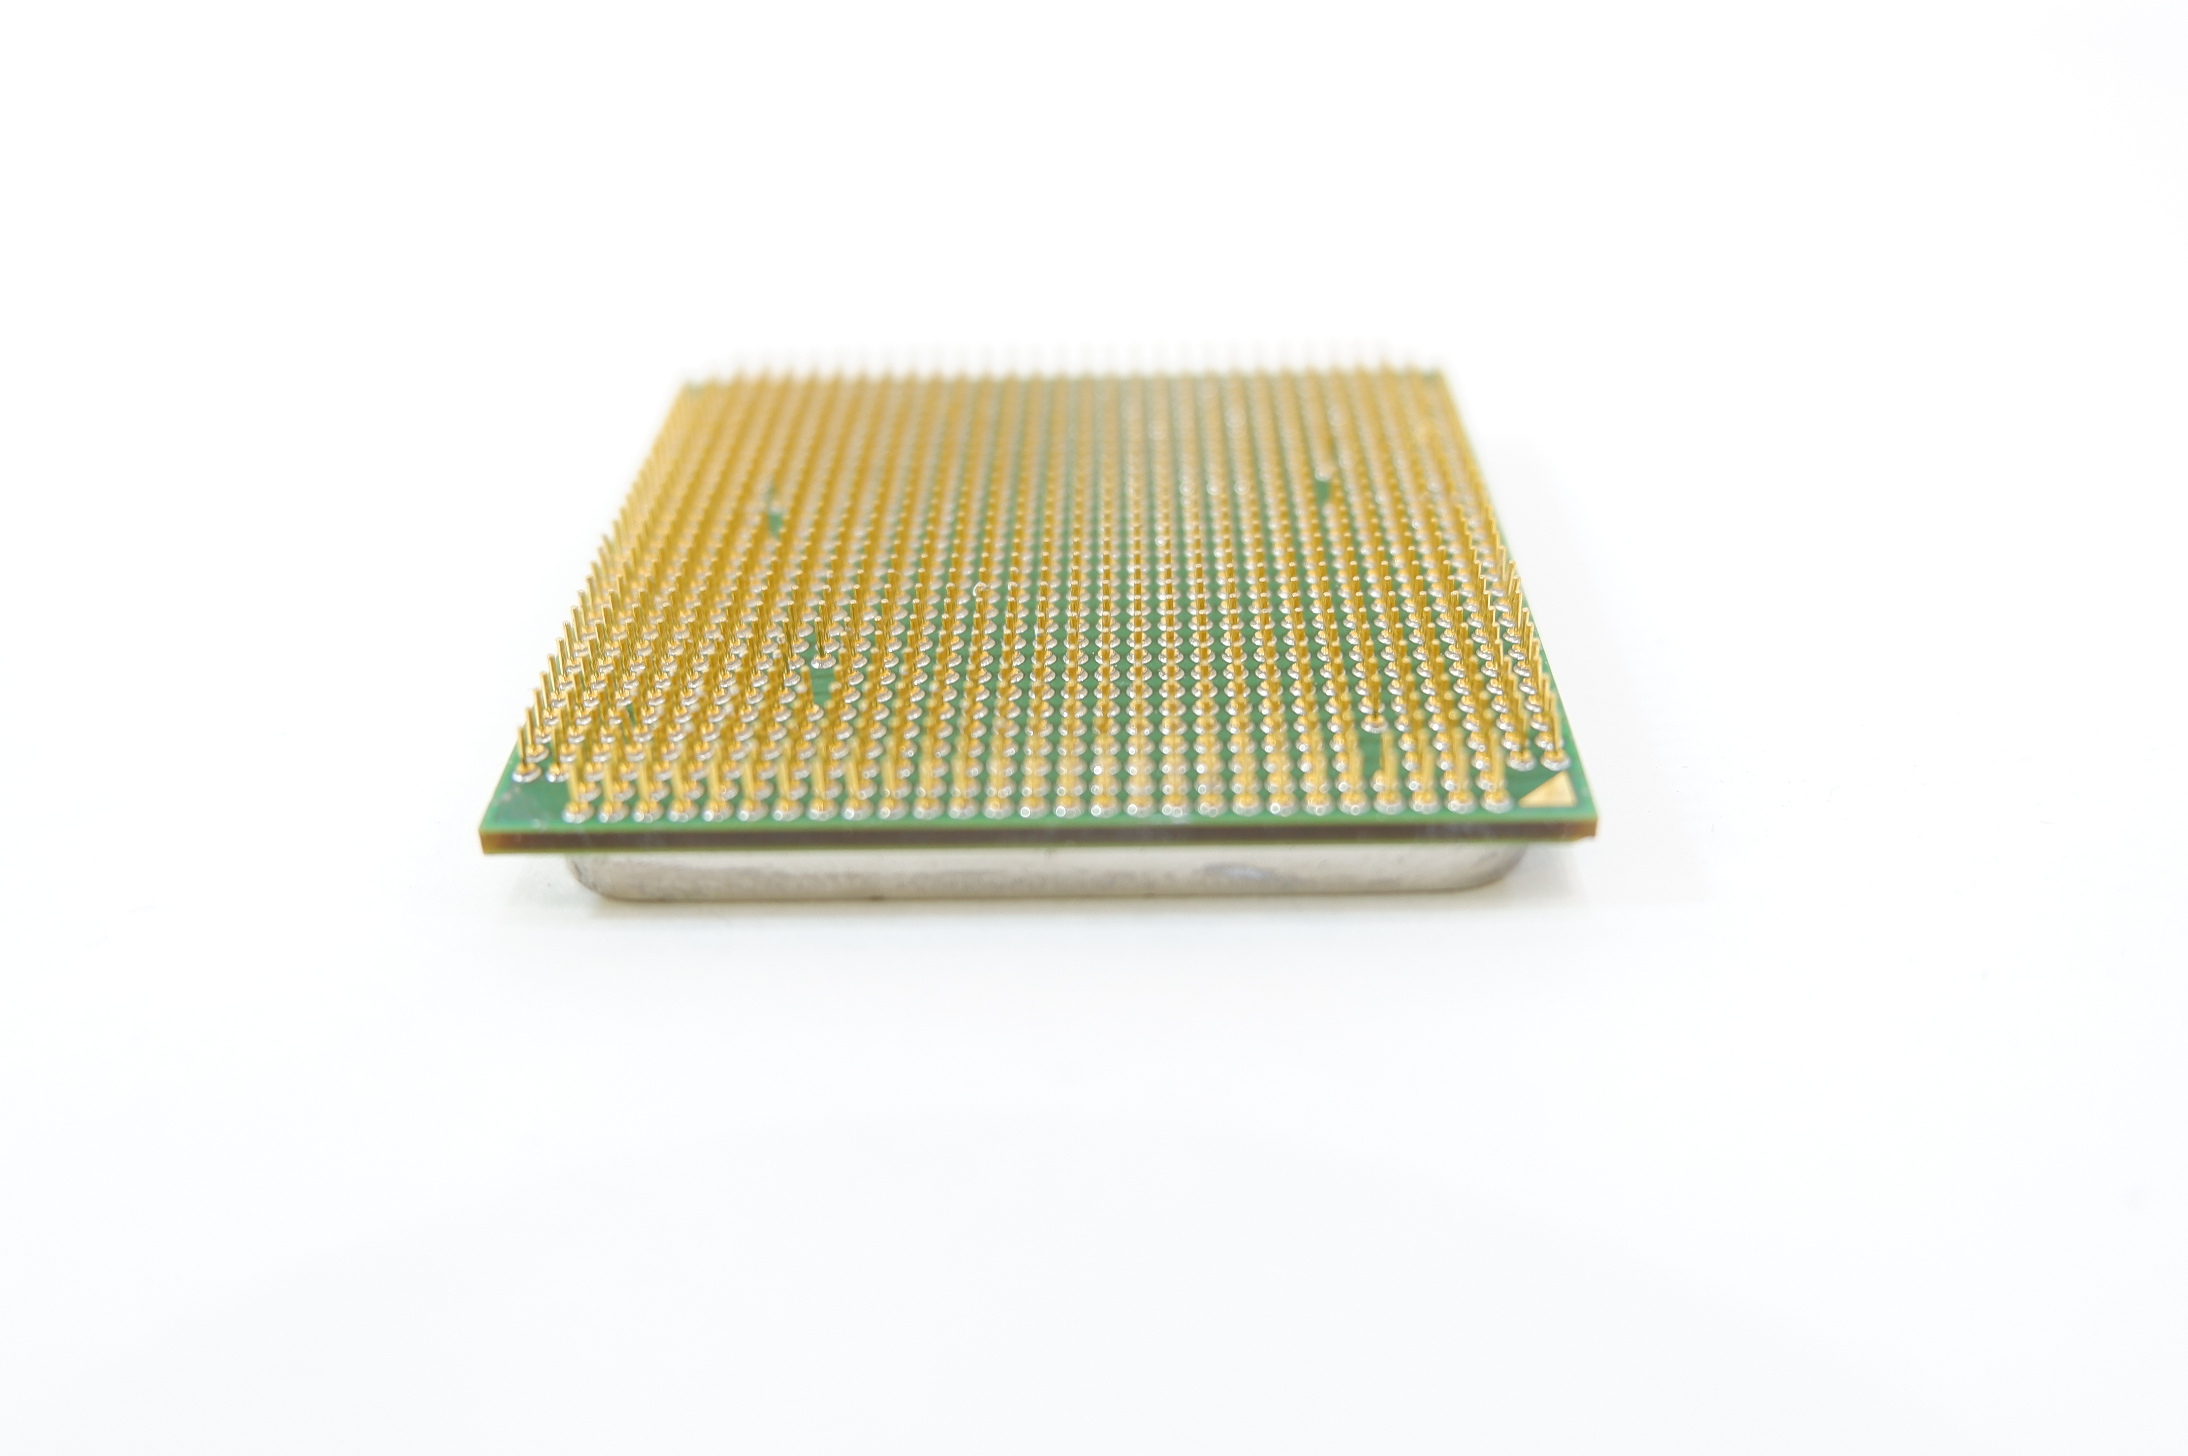 Процессор s939 AMD Athlon 64 3500+ 2.2GHz - Pic n 280798